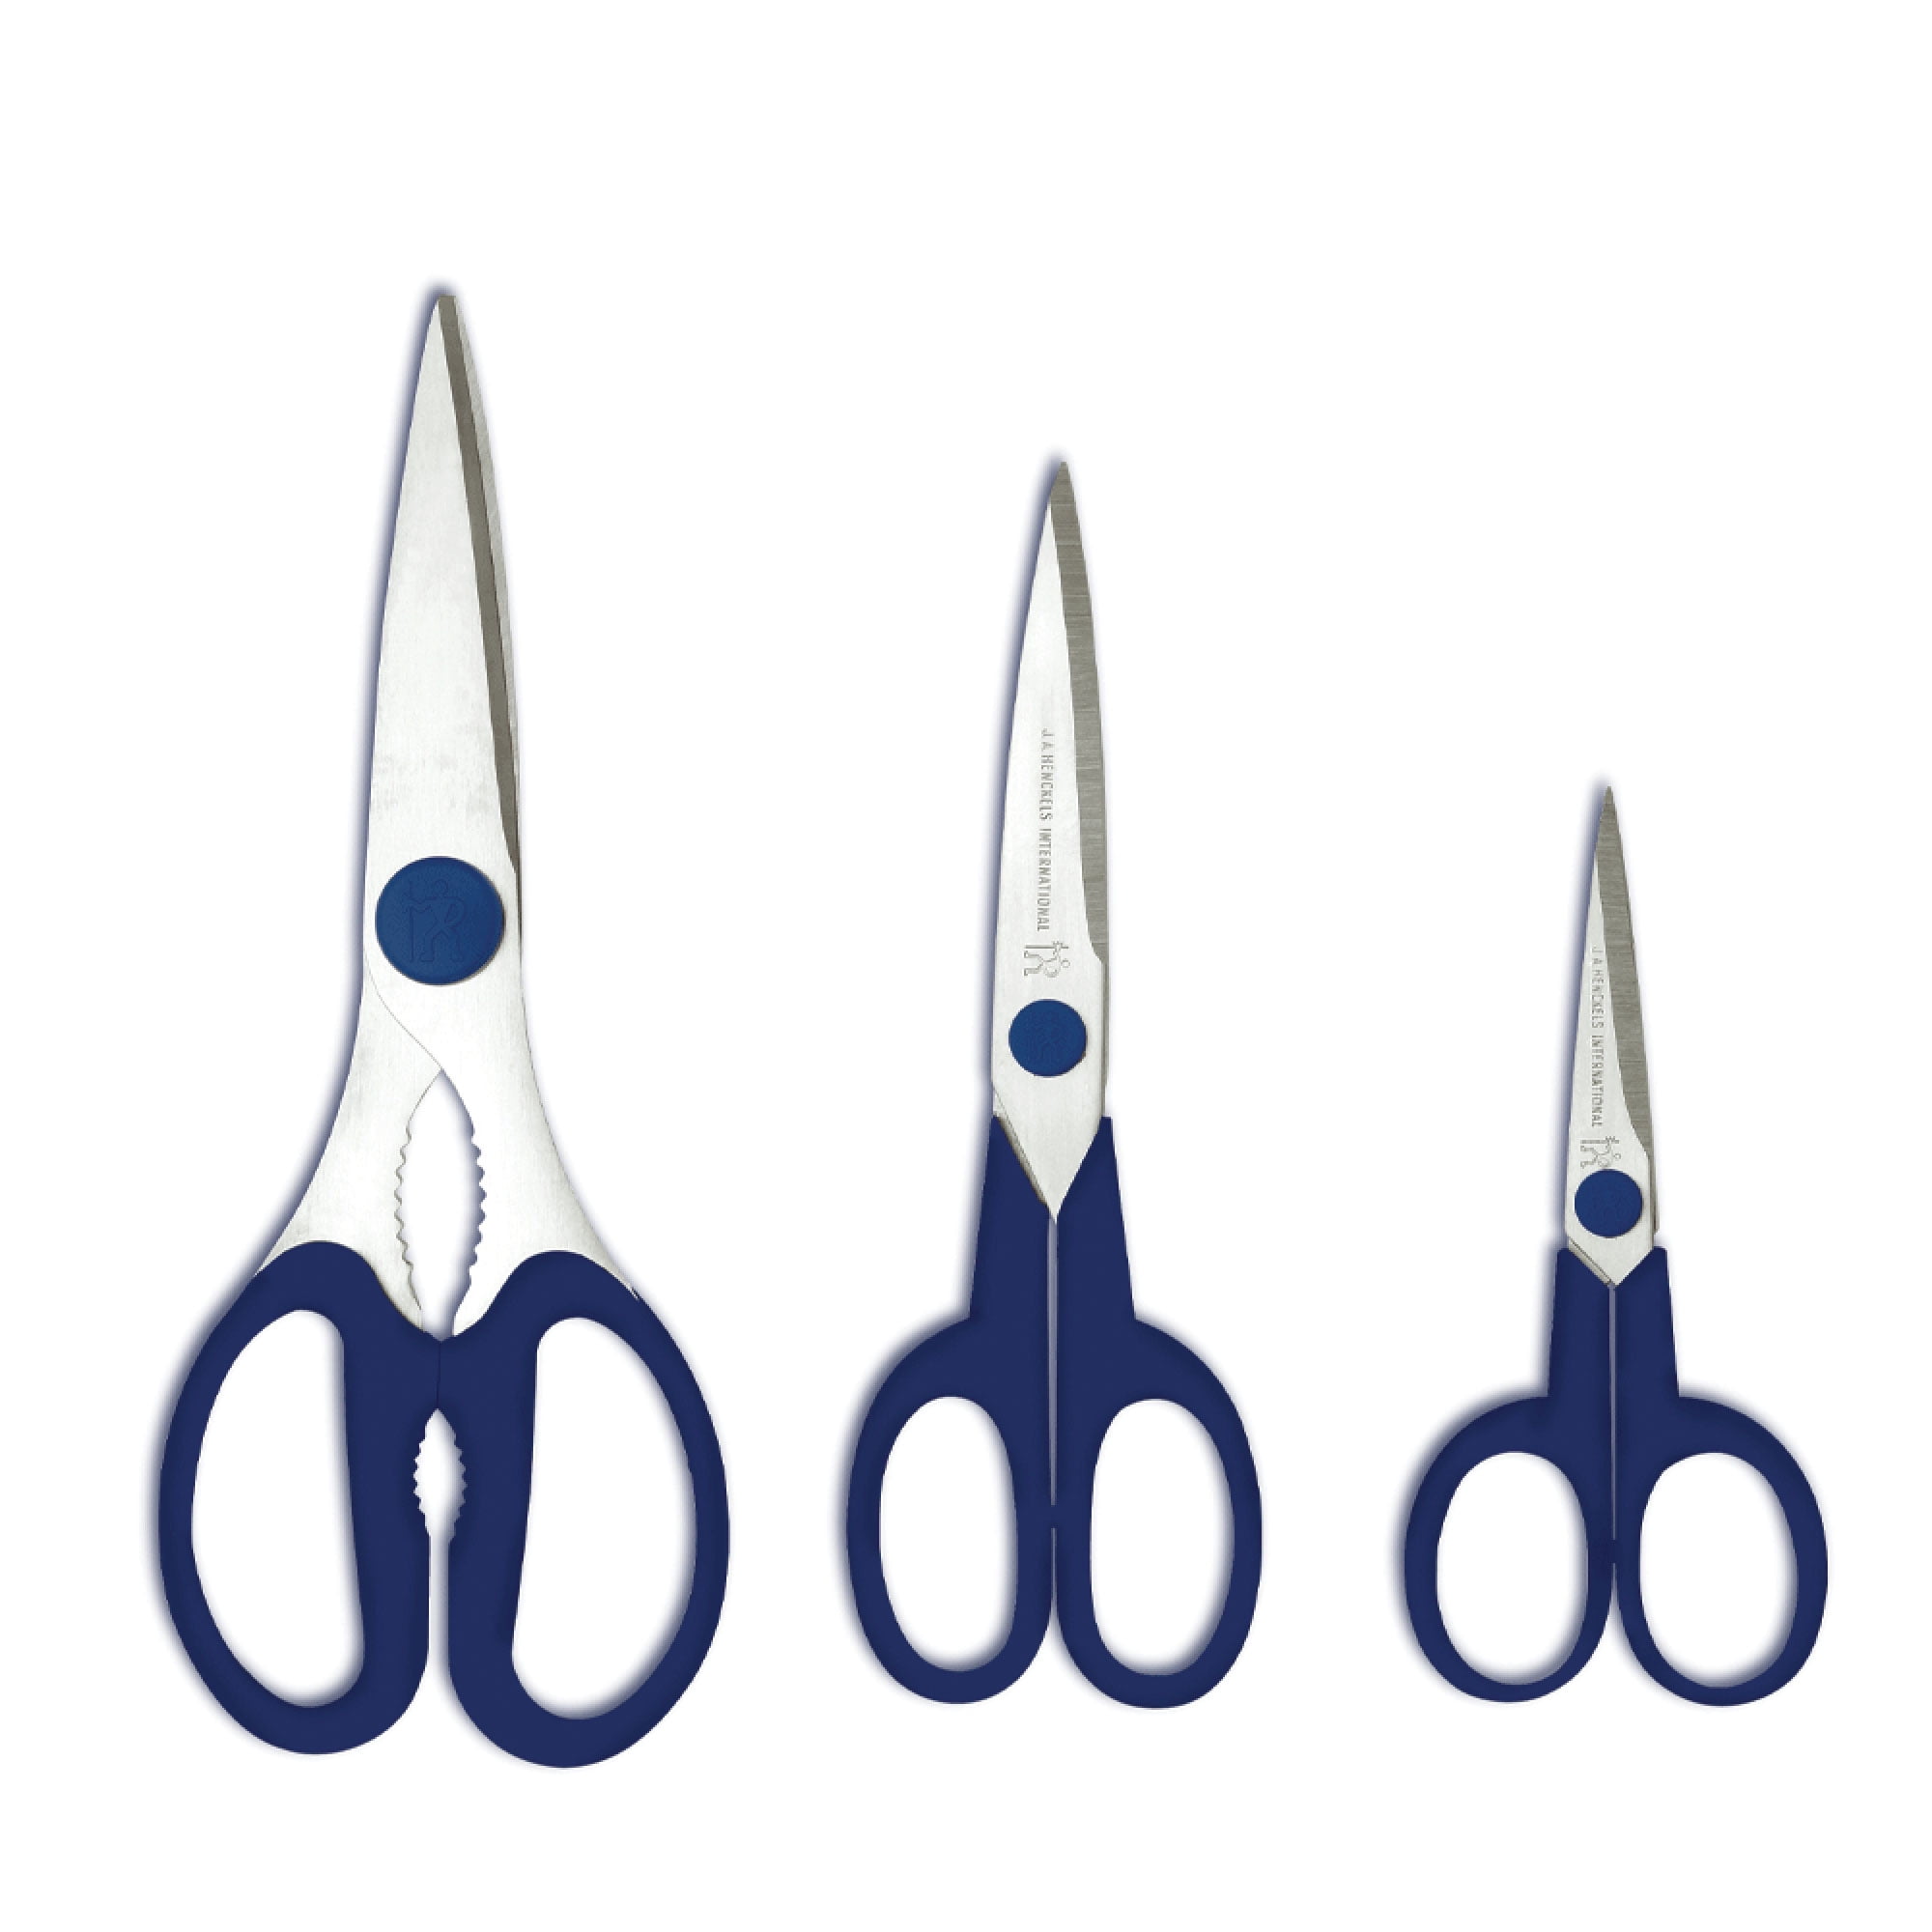 Henckels Henckels safe grip cuisine shears kitchen scissors